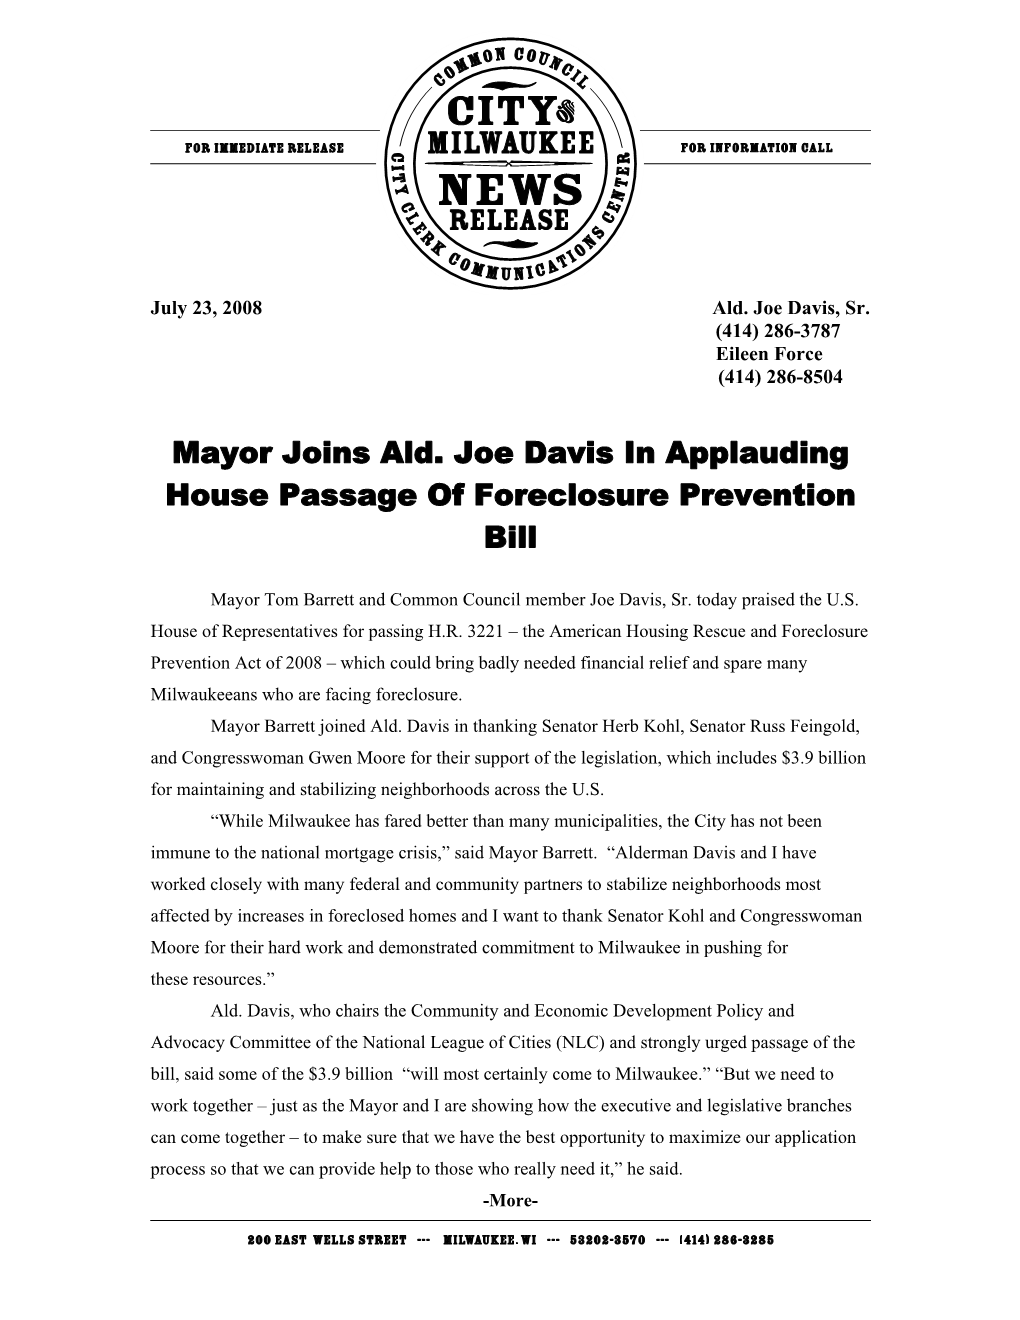 Mayor Joins Ald. Joe Davis in Applauding House Passage of Foreclosure Prevention Bill